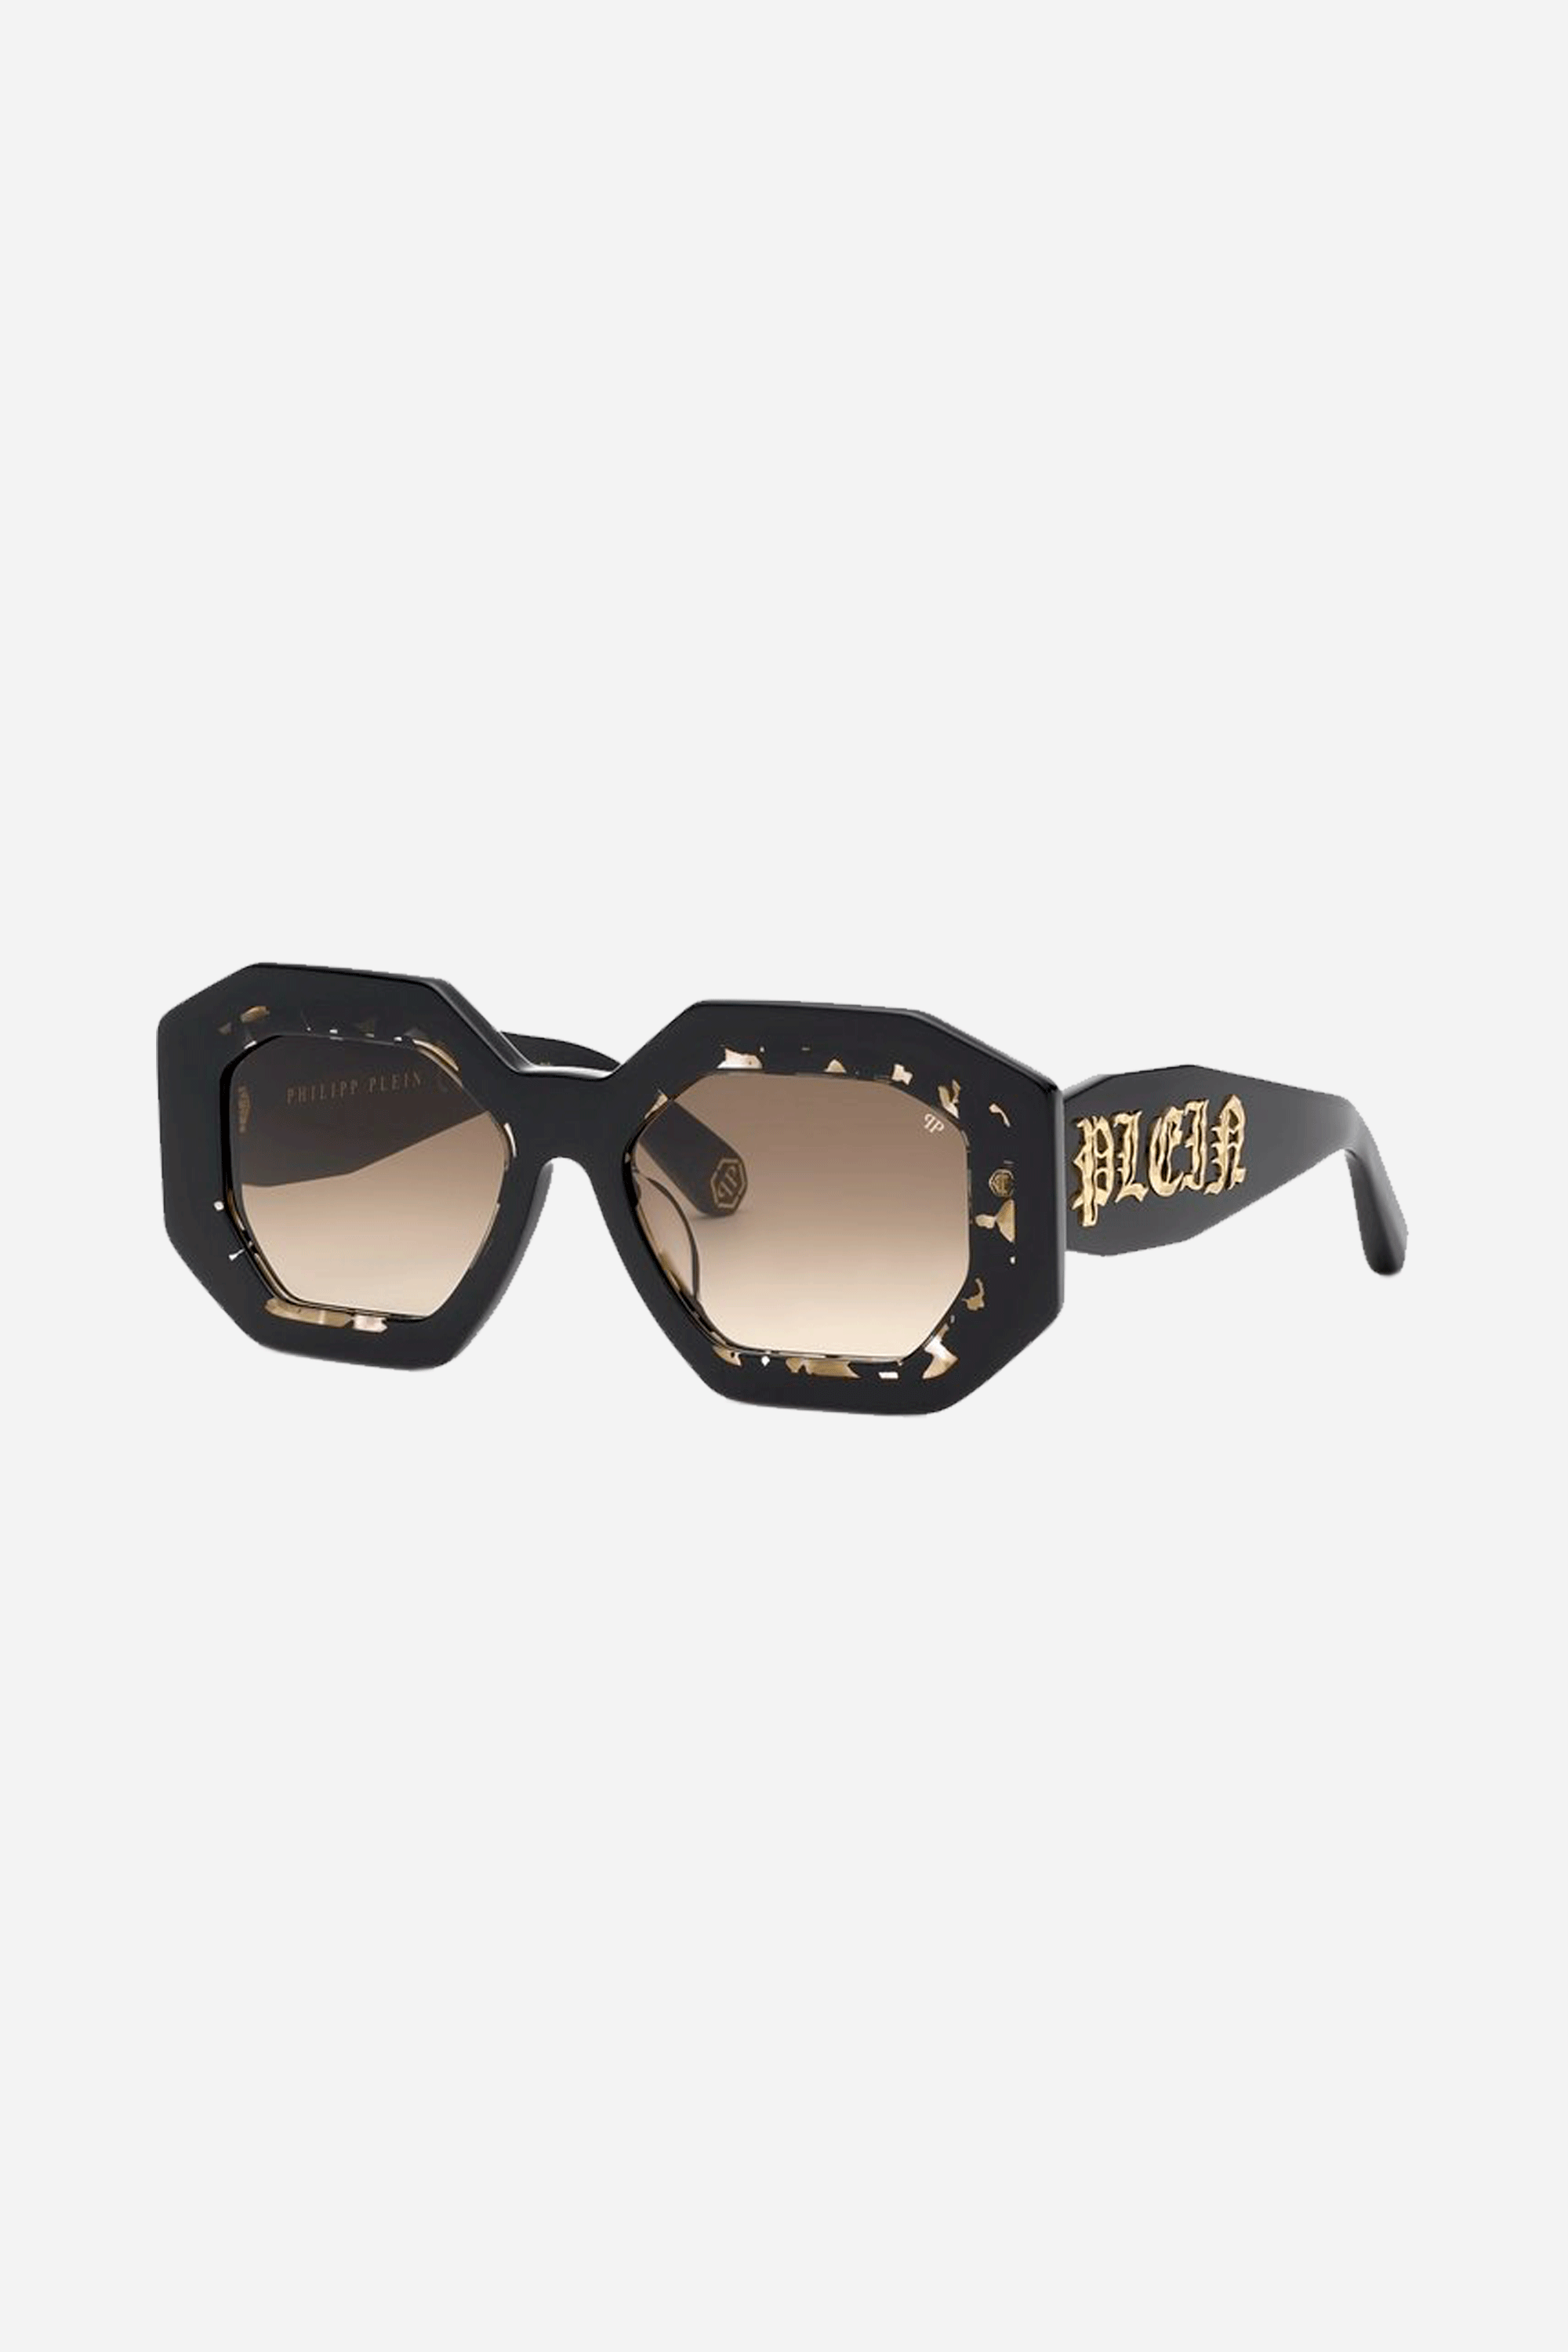 Philipp Plein oval black sunglasses - Eyewear Club